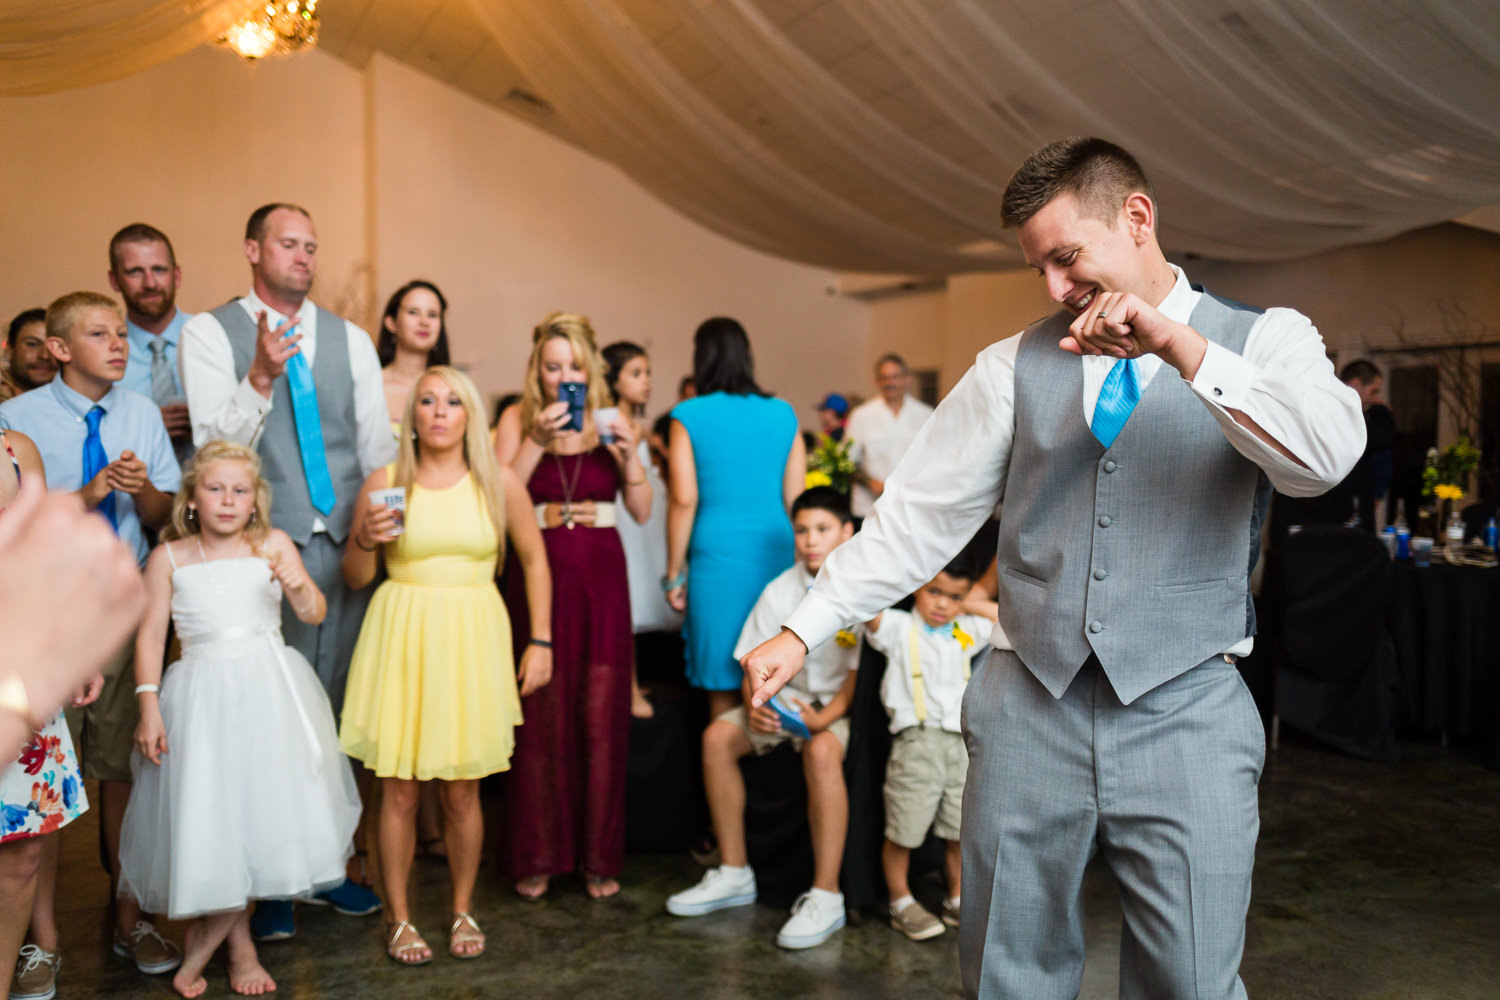 billings-montana-chanceys-wedding-reception-groom-dancing.jpg